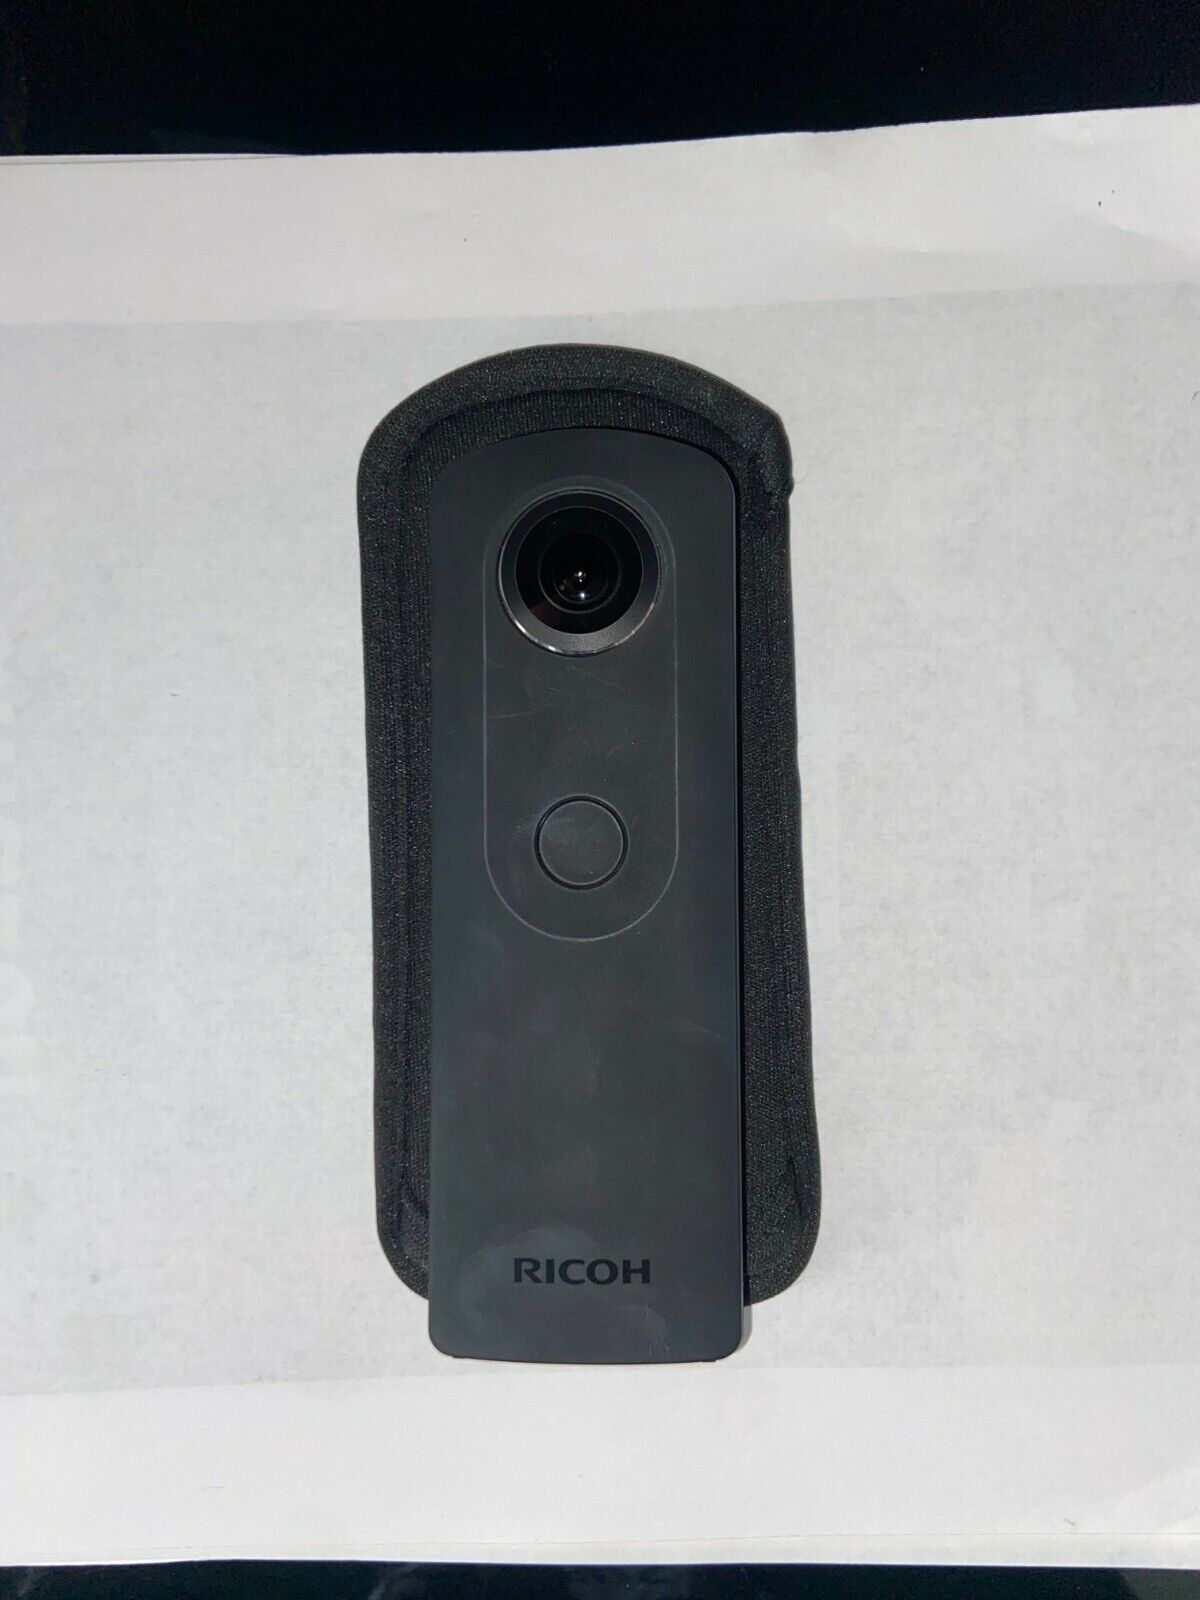 Ricoh THETA S 14.0MP Digital Camera - Black 26649107207 | eBay